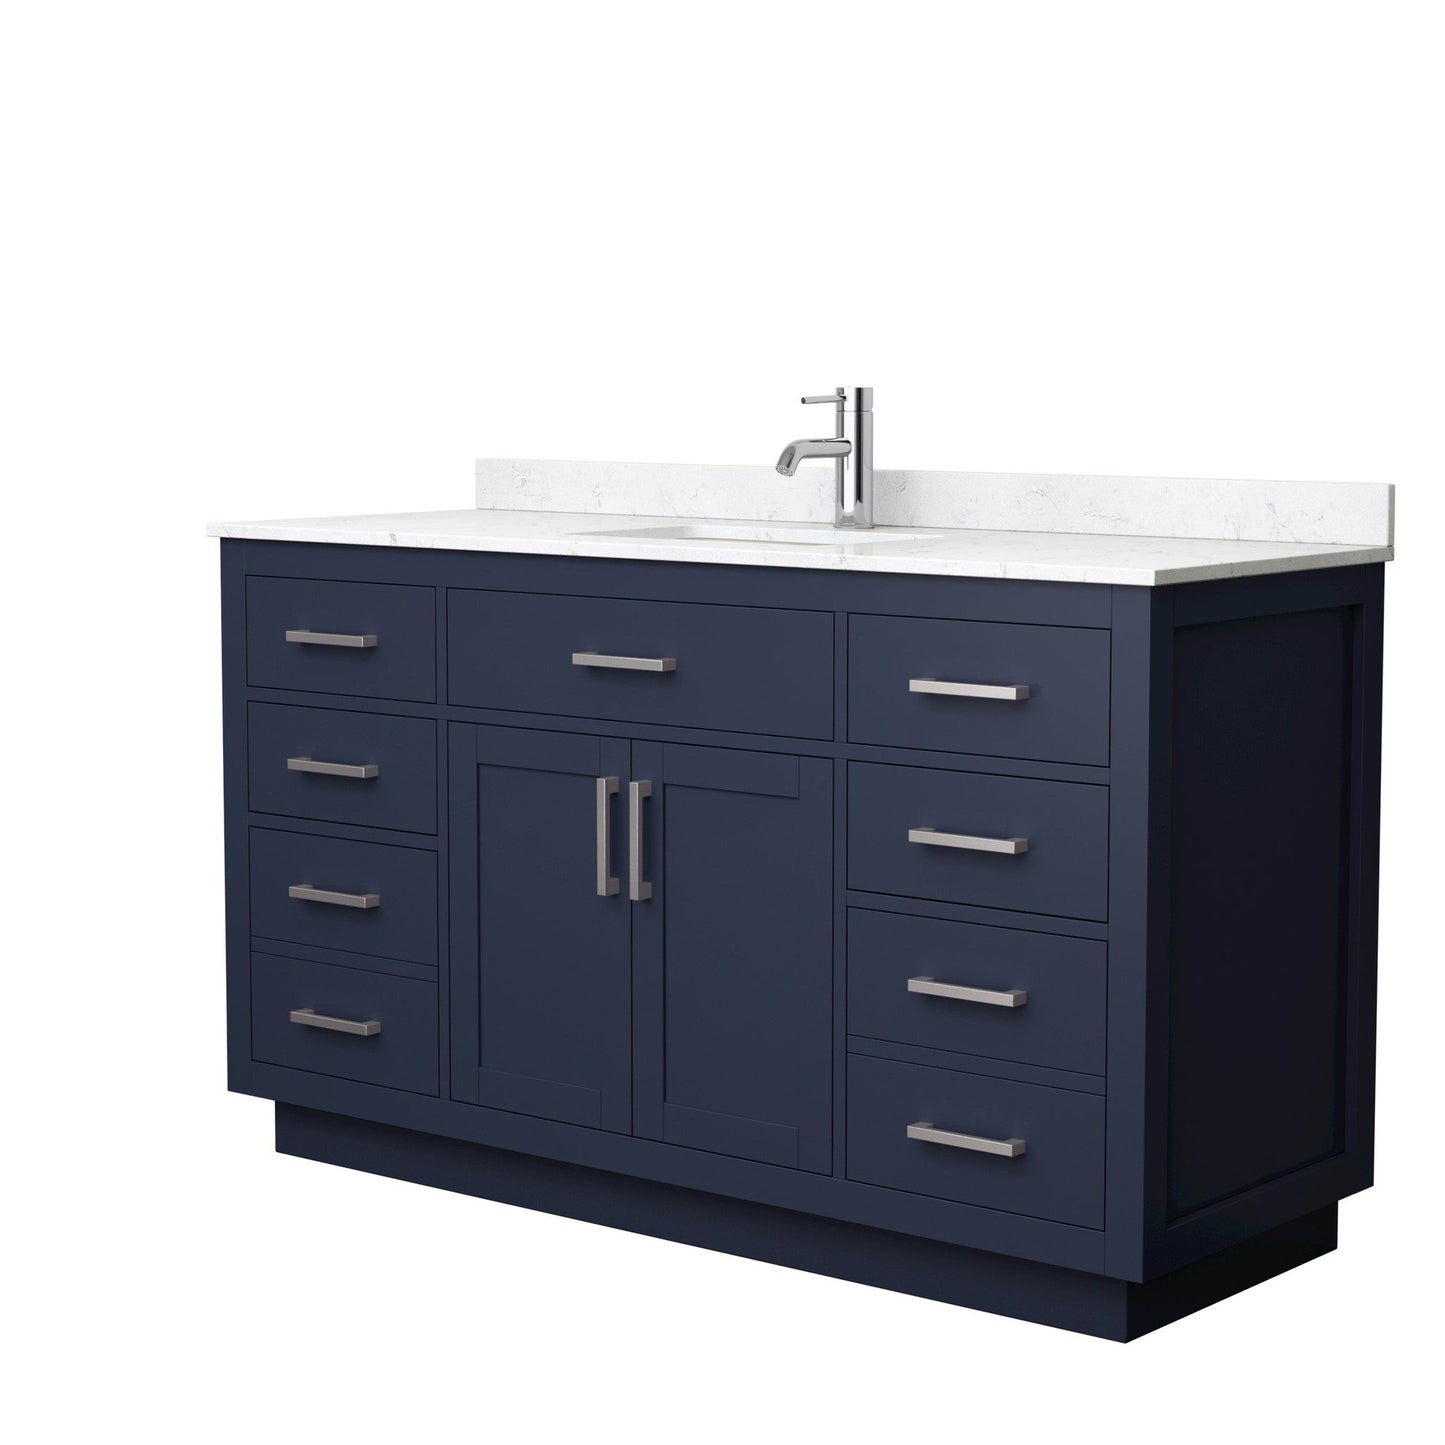 Beckett 60" Single Bathroom Vanity With Toe Kick in Dark Blue, Carrara Cultured Marble Countertop, Undermount Square Sink, Brushed Nickel Trim